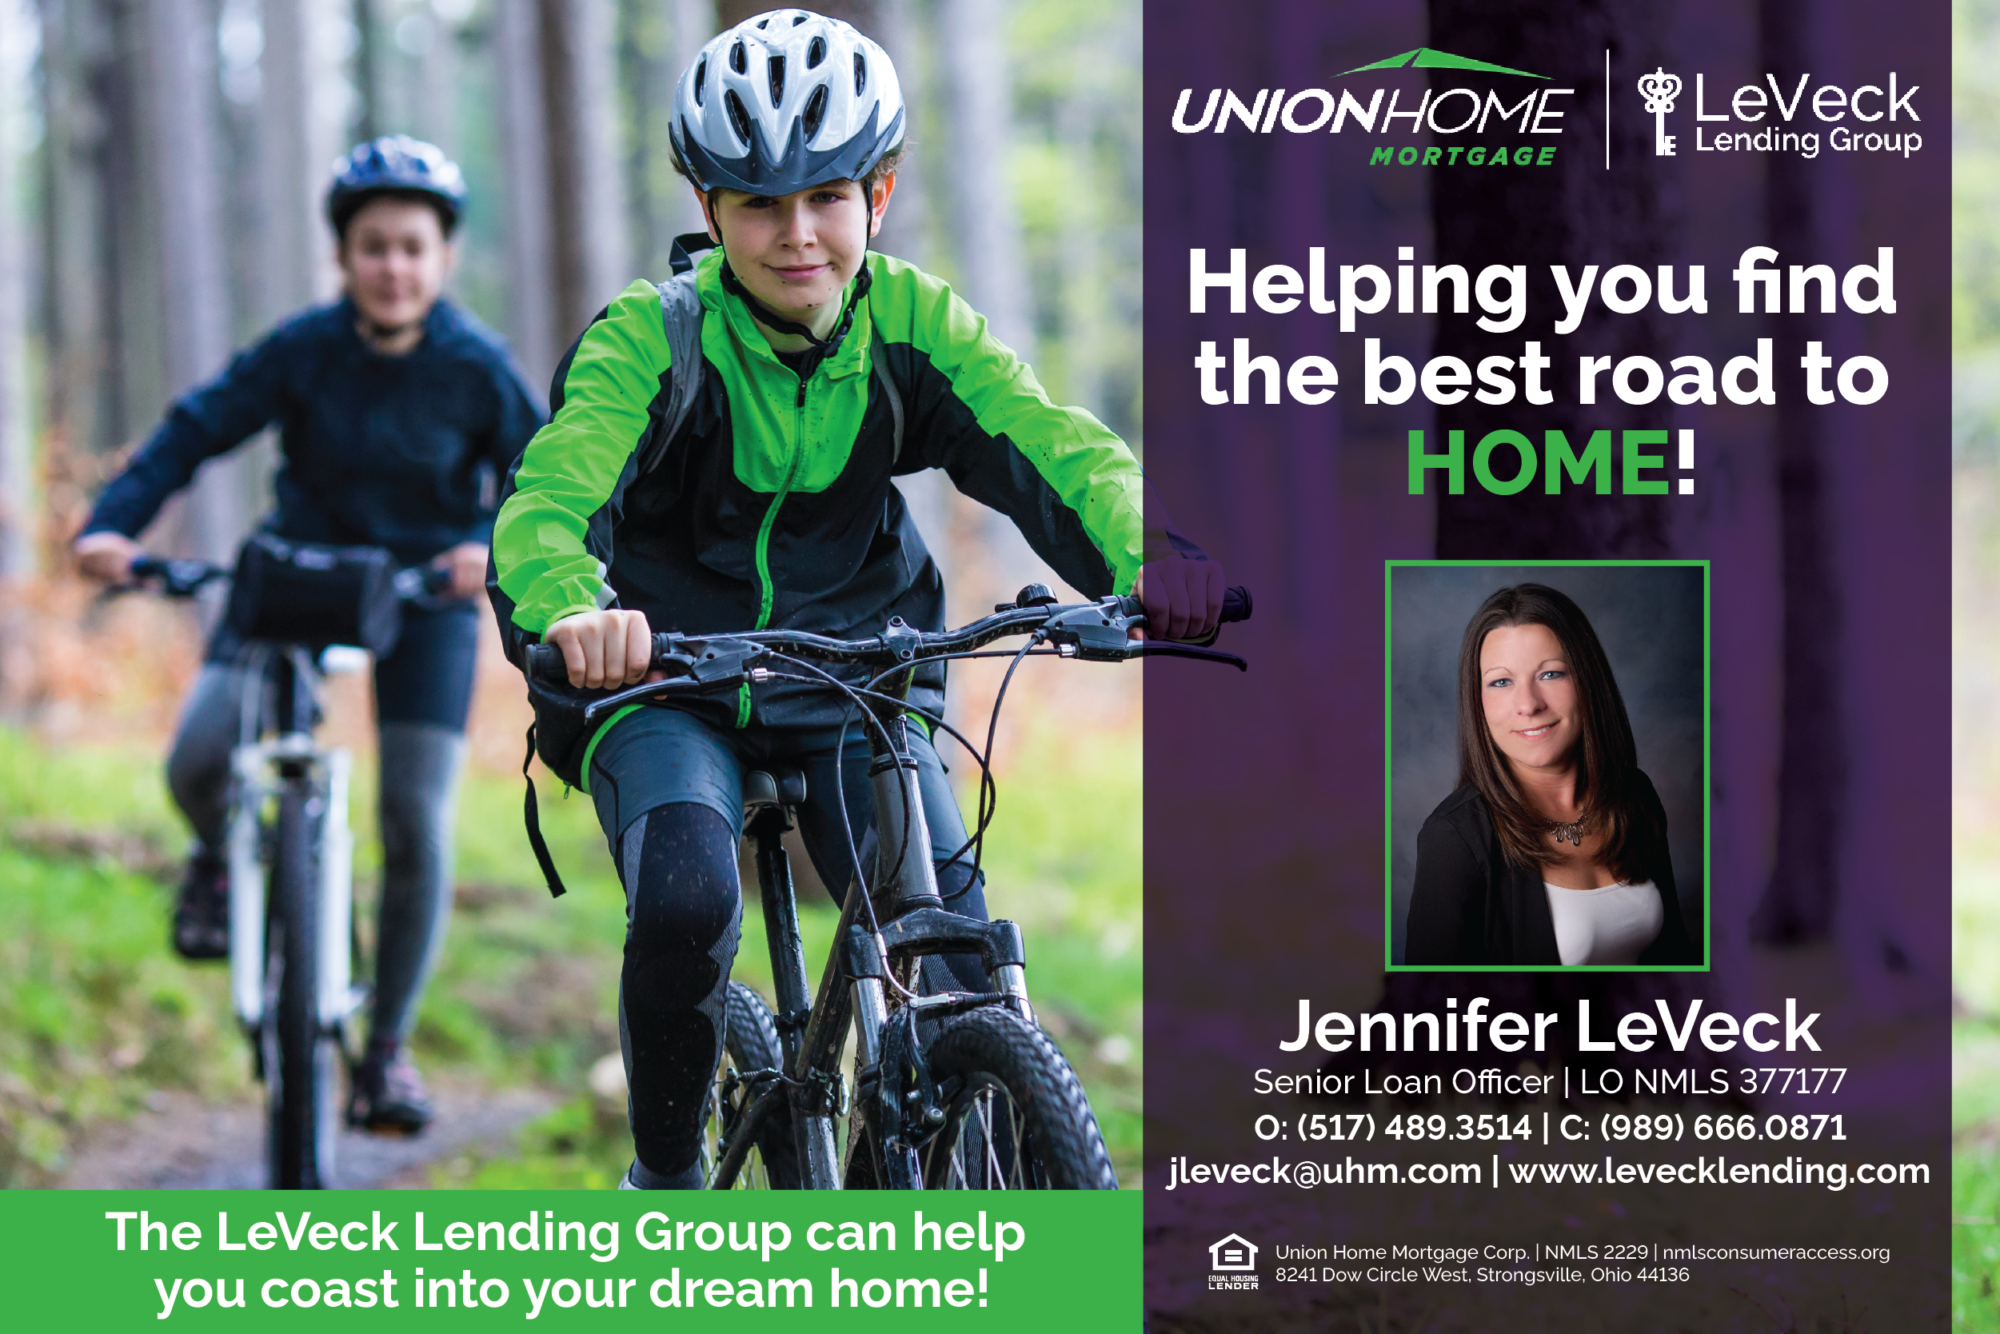 Jennifer LeVeck – Union Home Mortgage